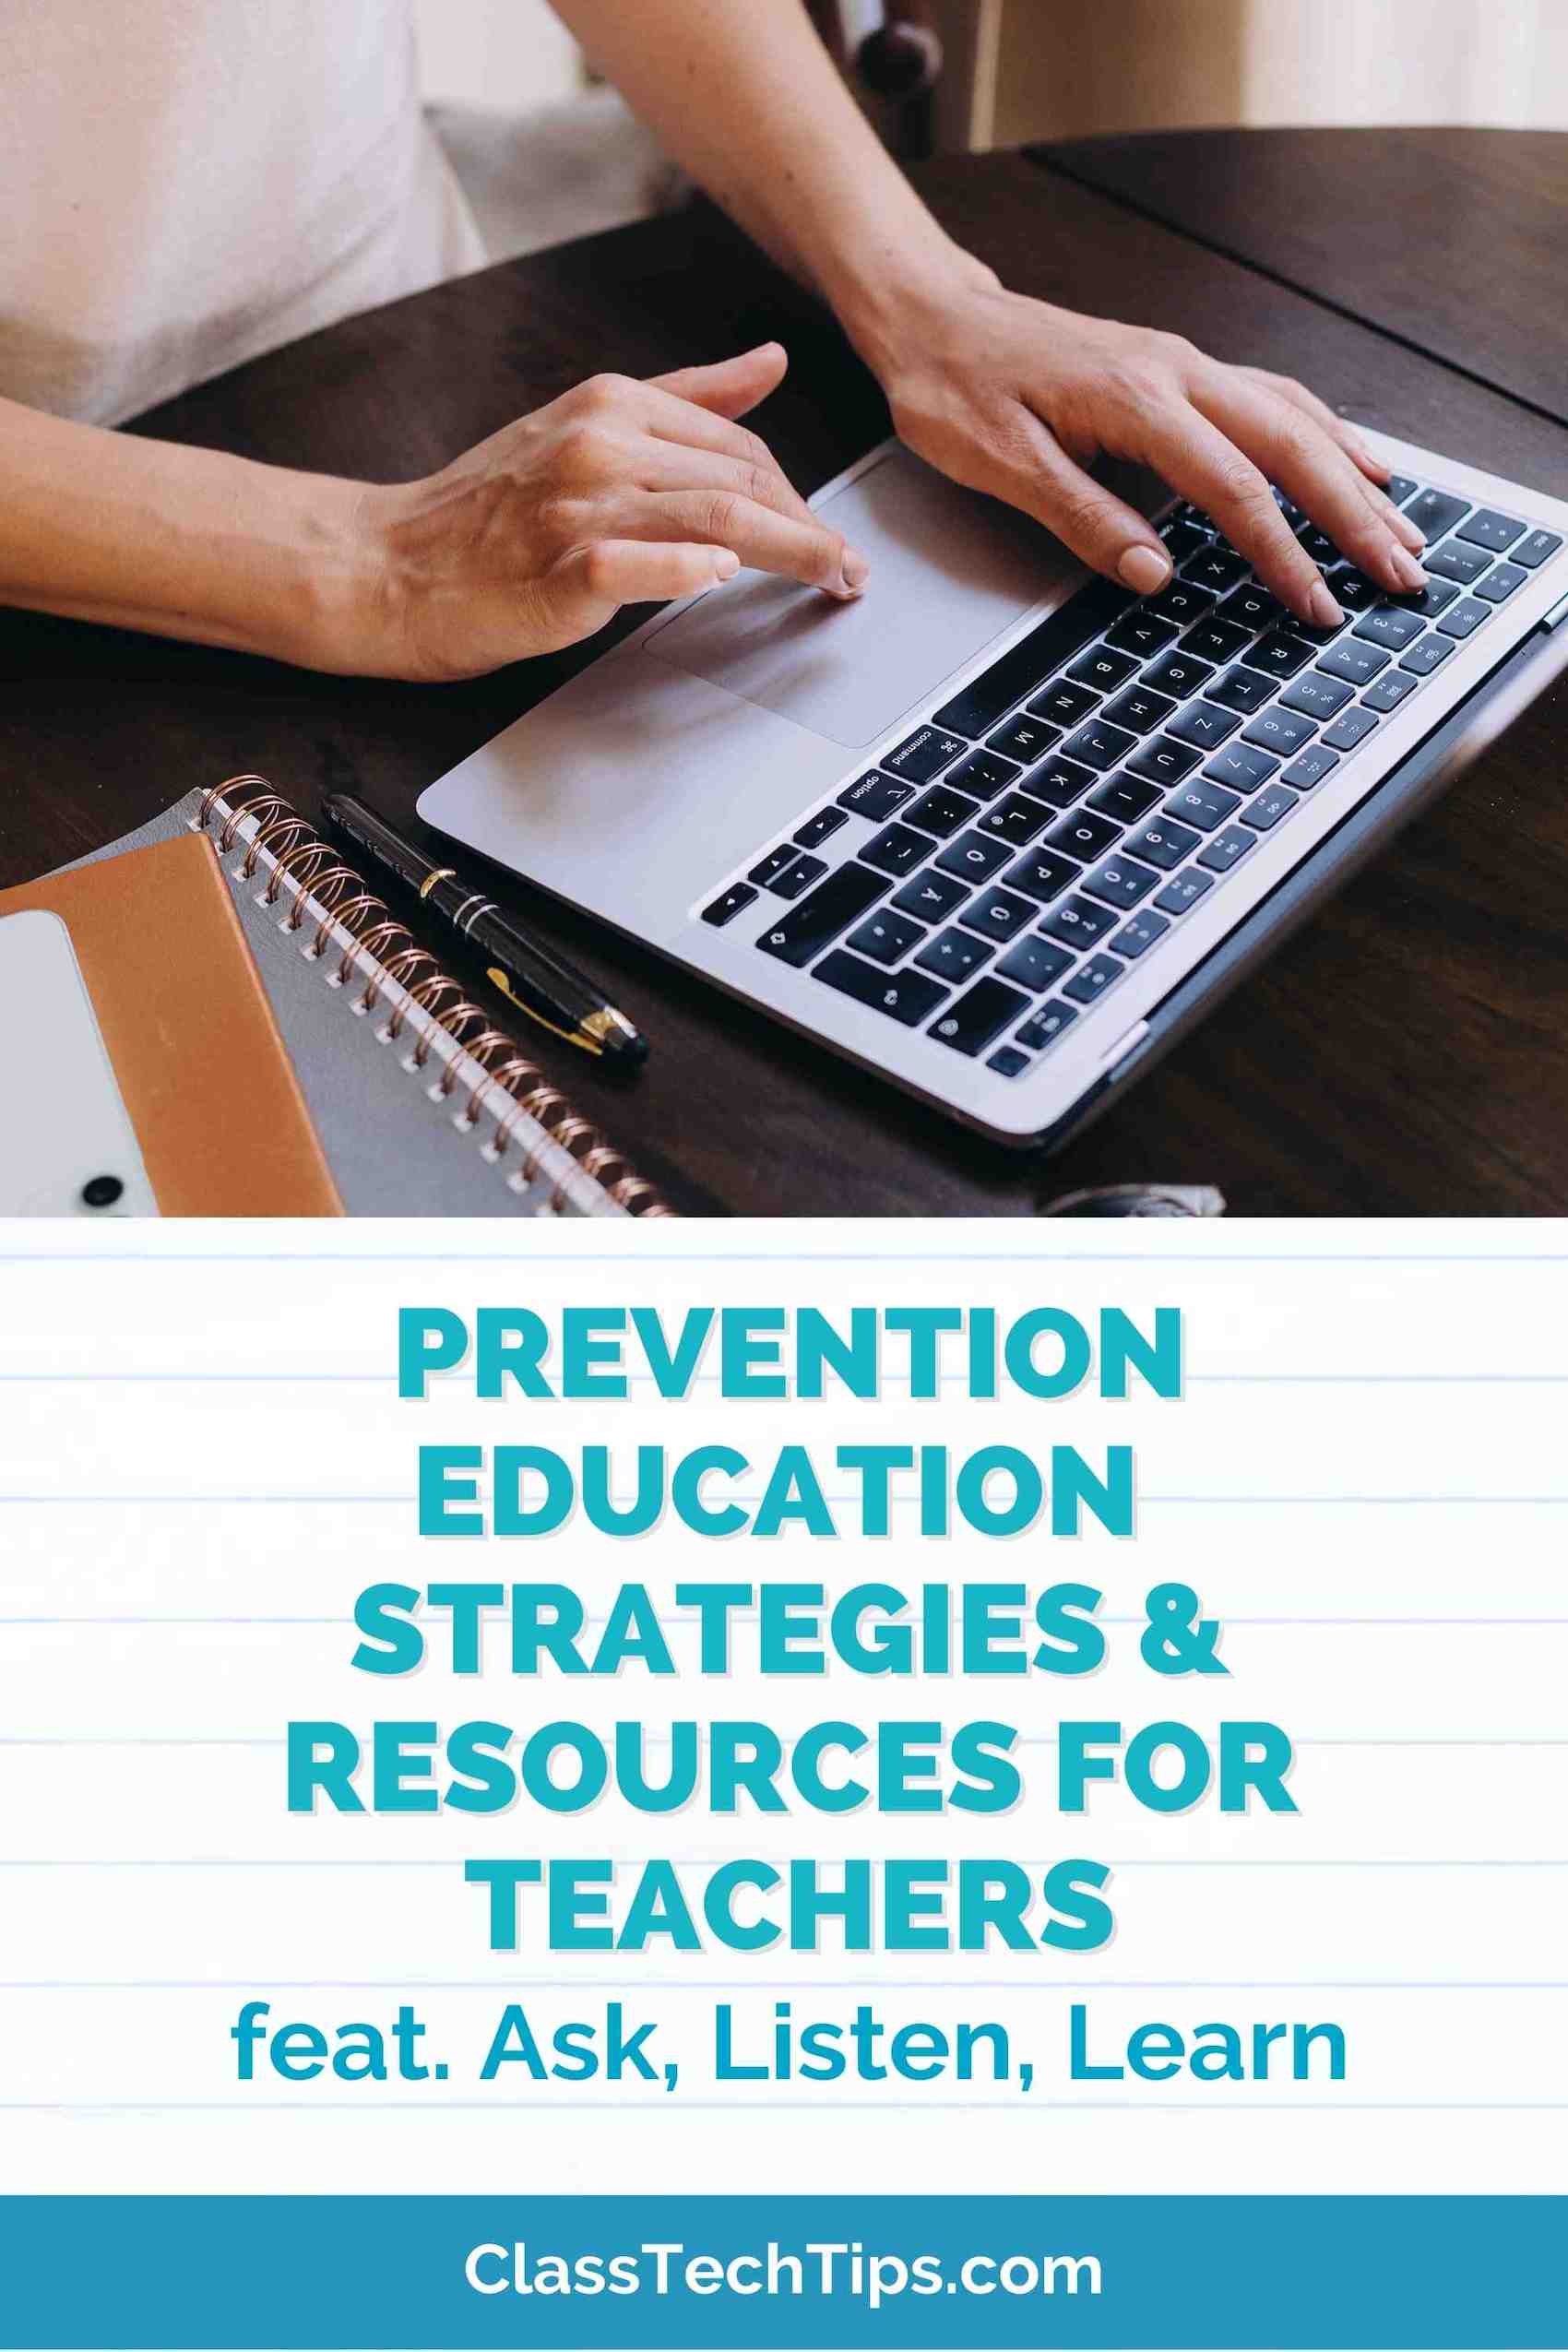 Prevention education